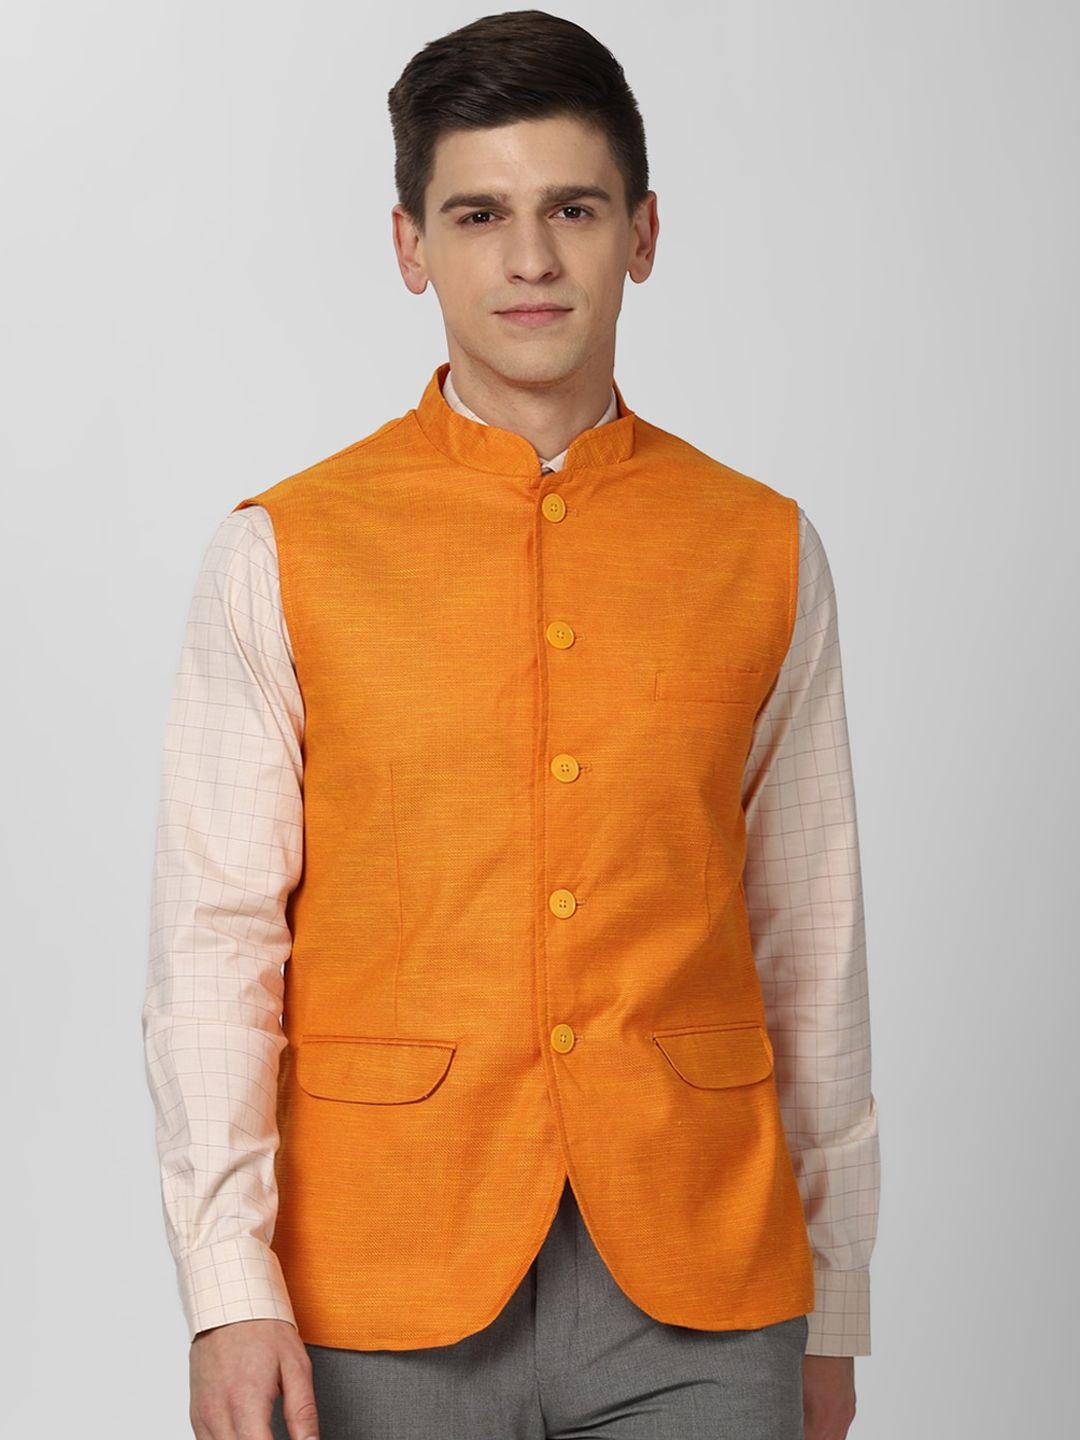 peter england elite men orange solid nehru jacket